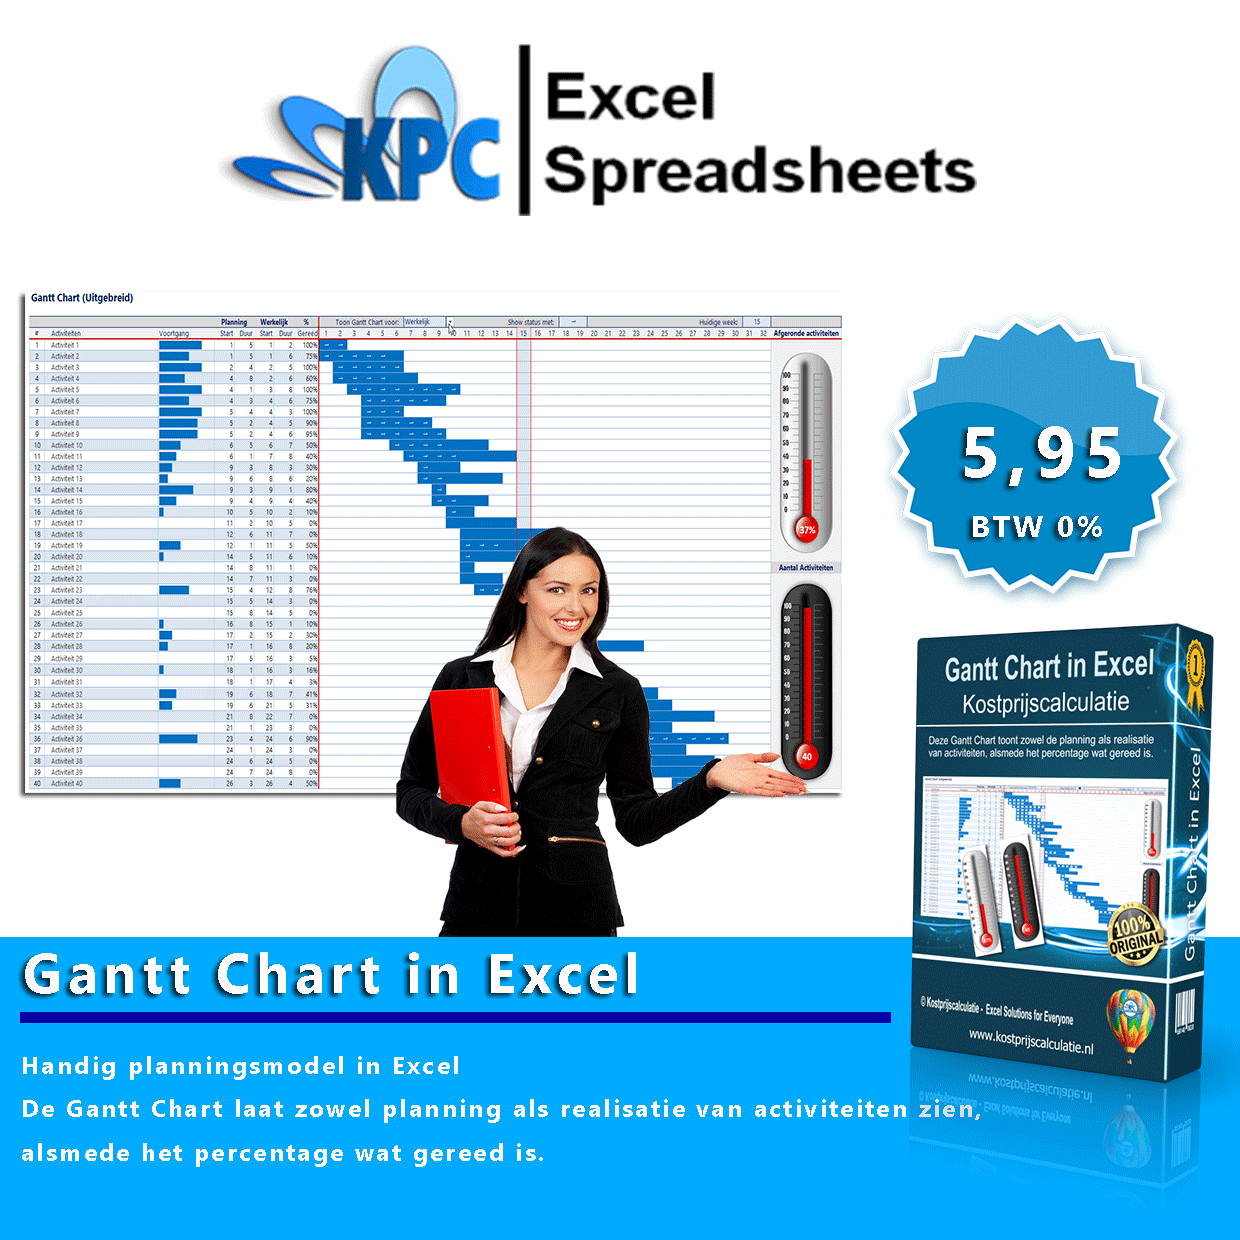 Gantt Chart in Excel